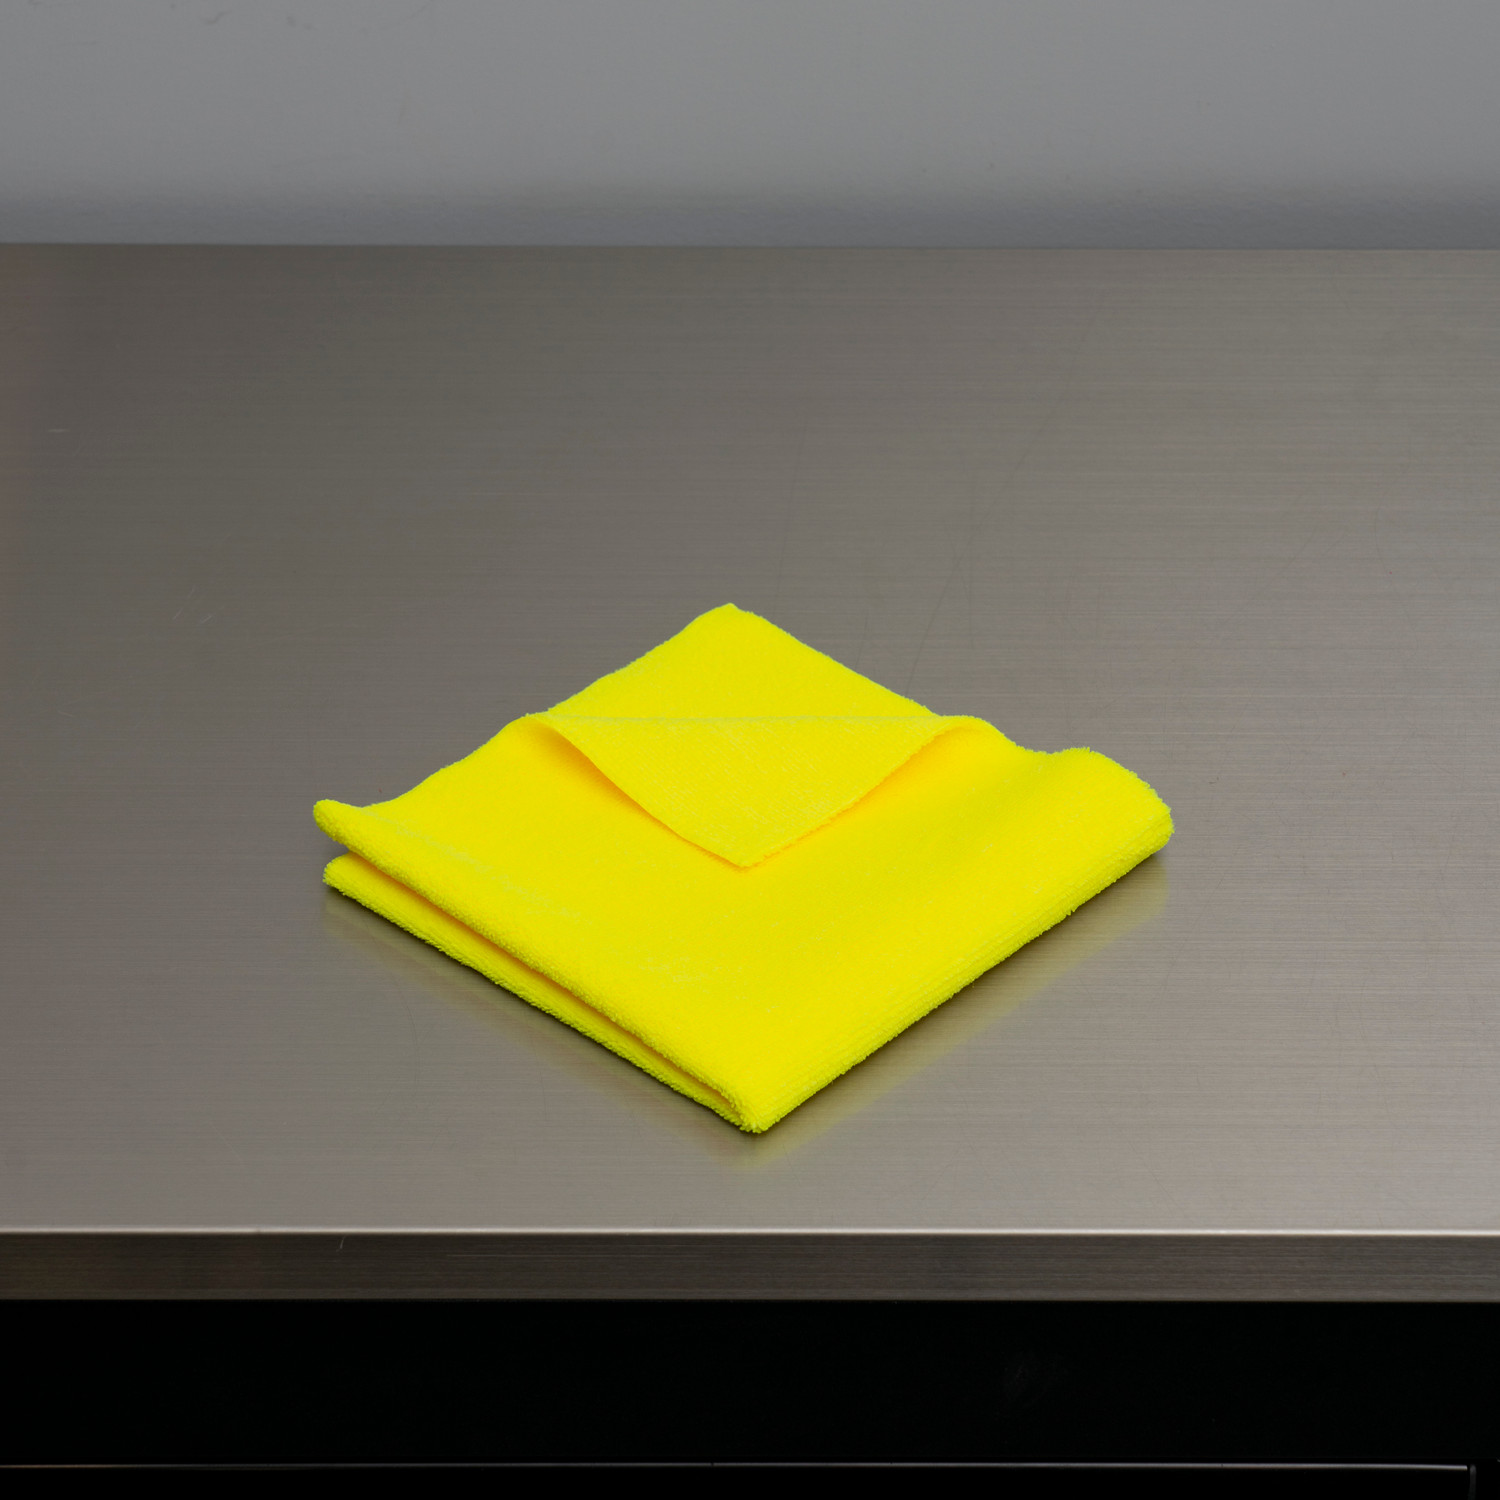 Microfiber Cloth Yellow 16 x 16 12pack